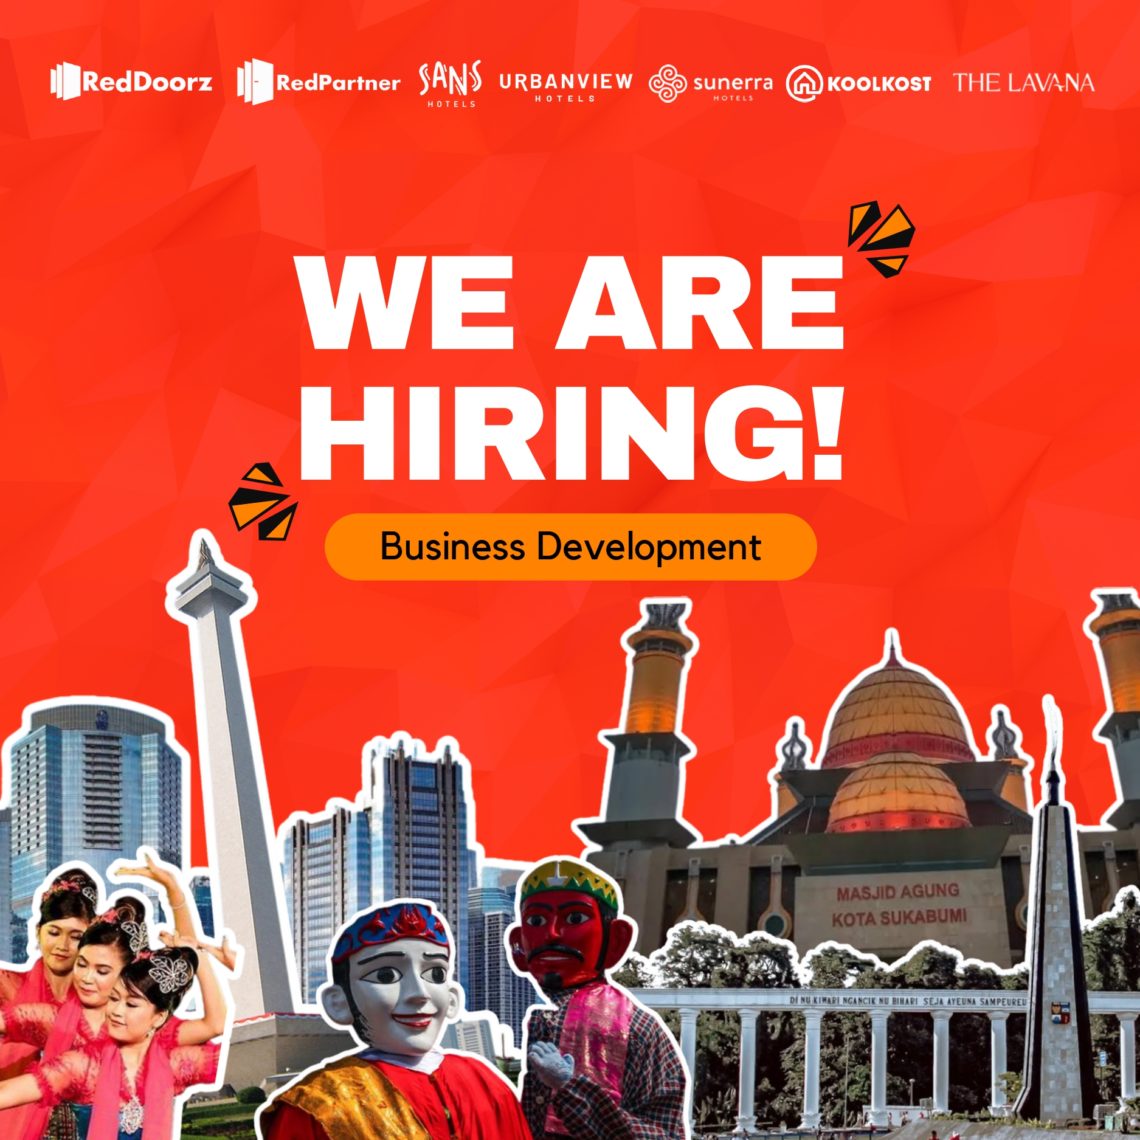 RedDoorz Hiring Posisi Business Development, Yuk Daftar!